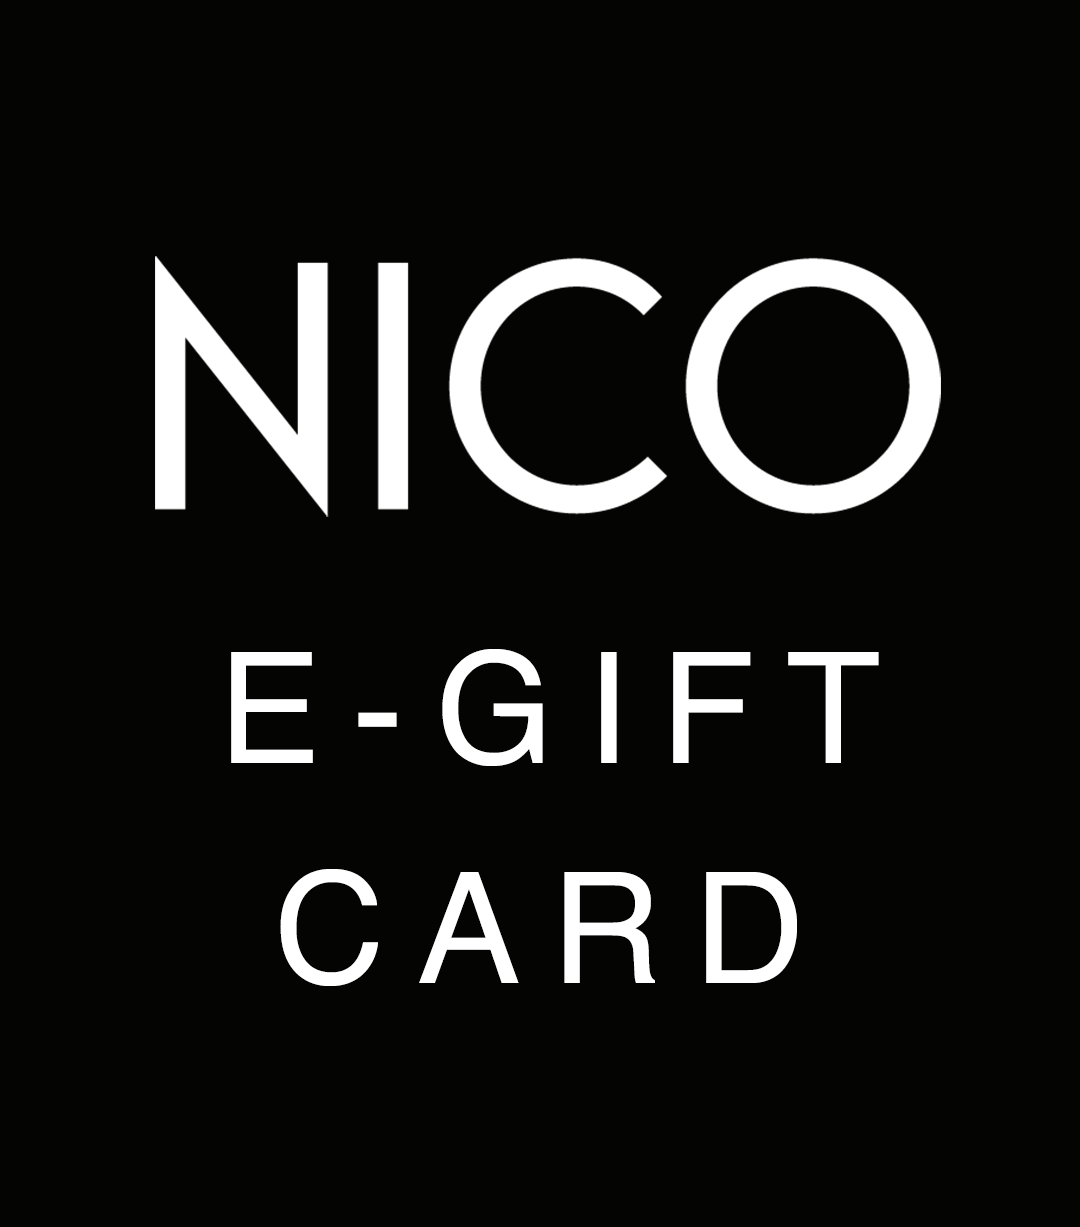 The NICO E-Gift card in black.